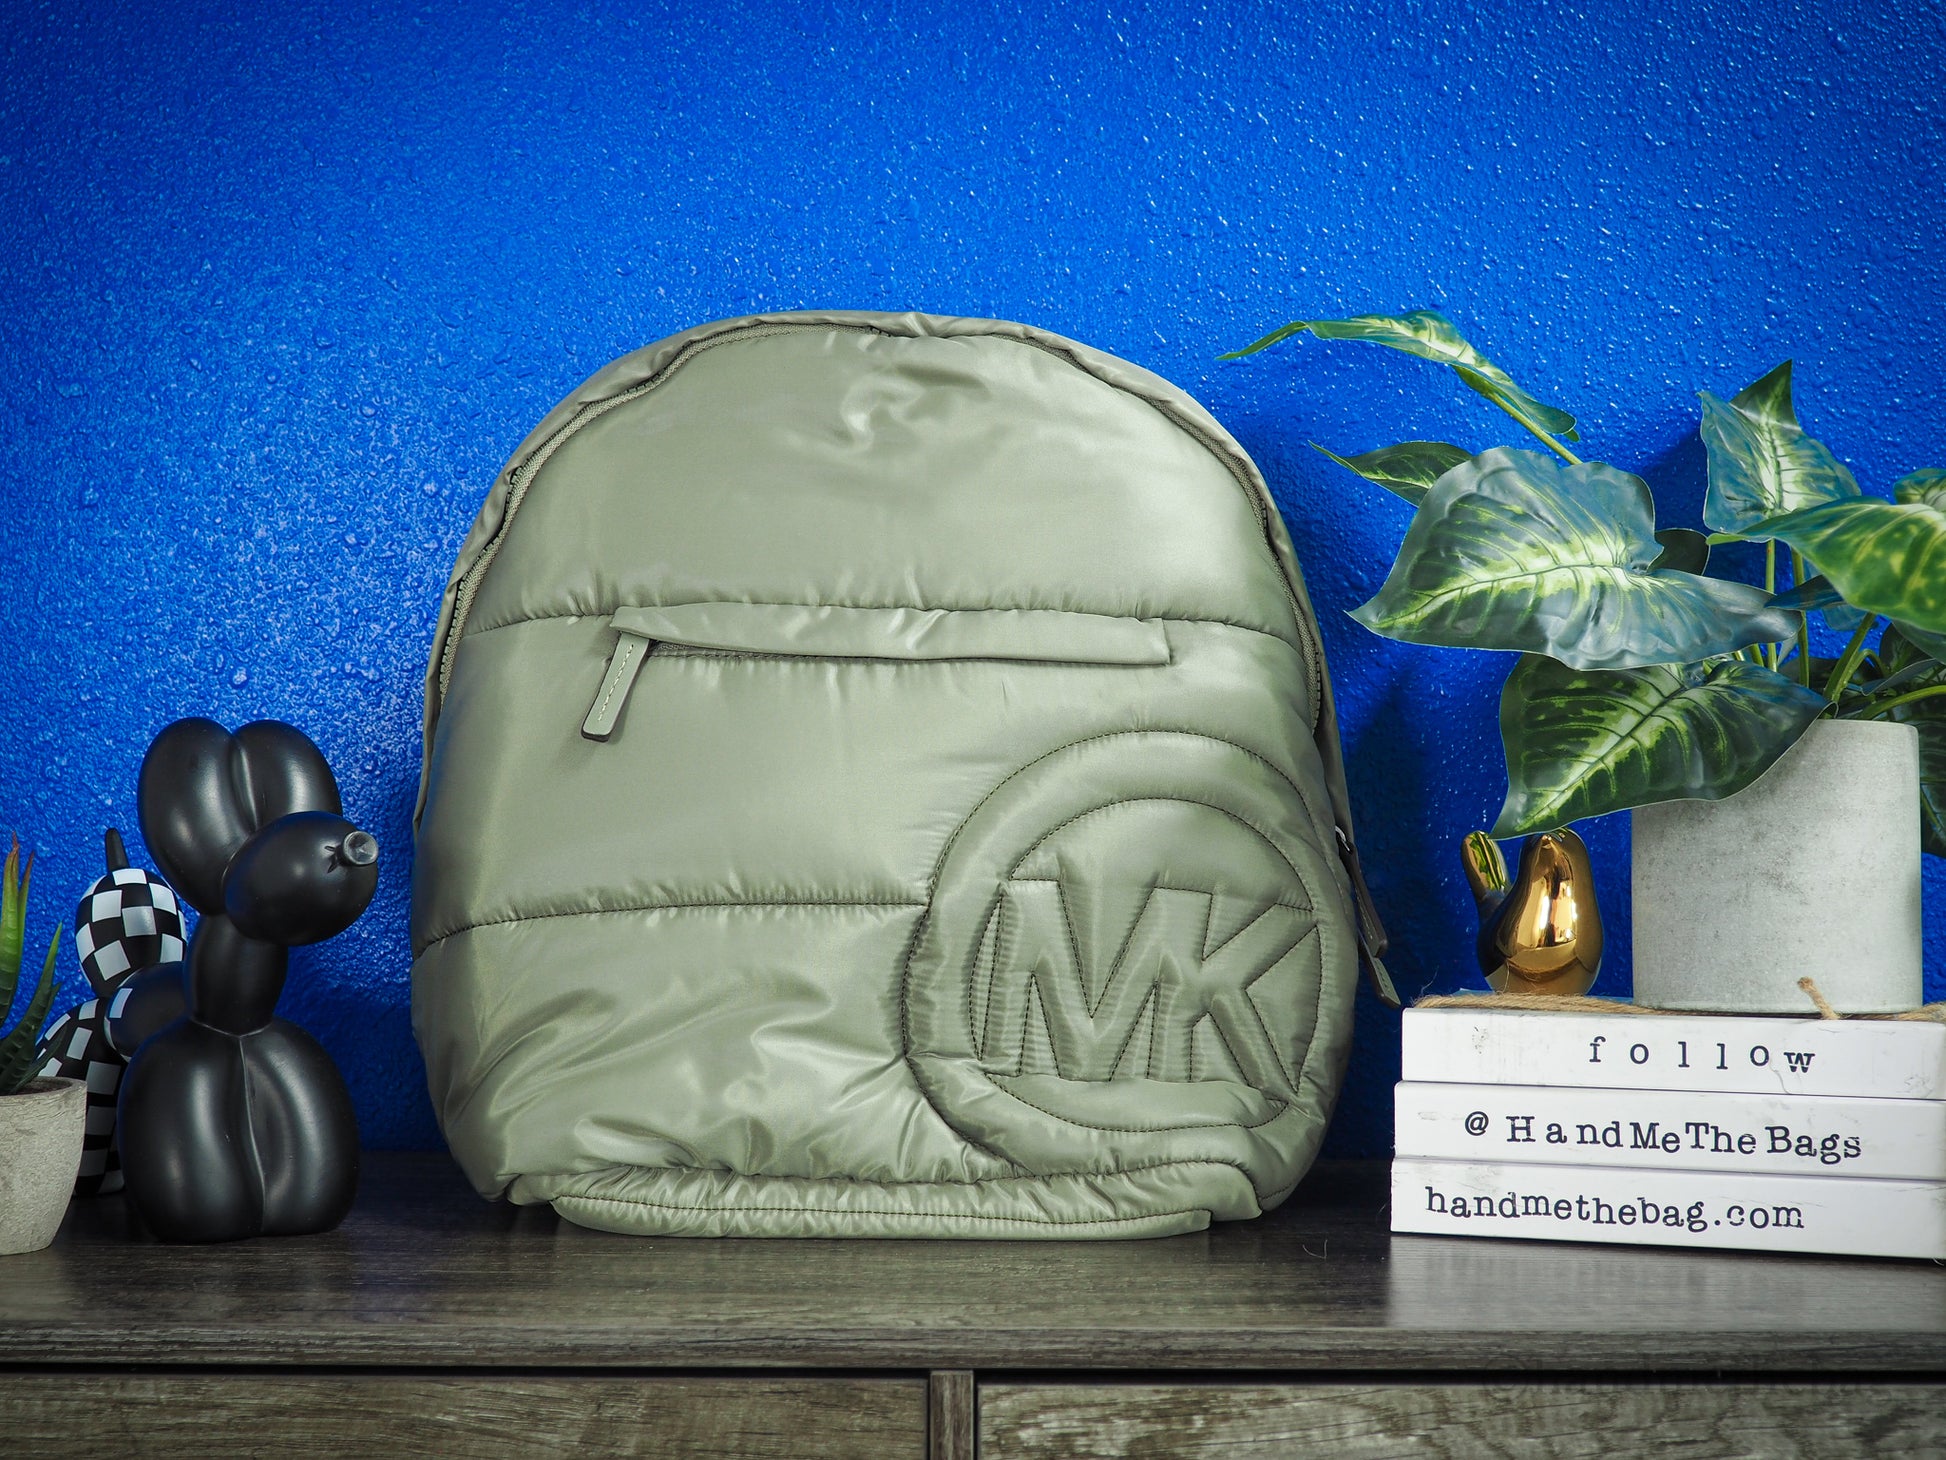 Michael Kors Rae Medium Green Quilted Nylon Backpack